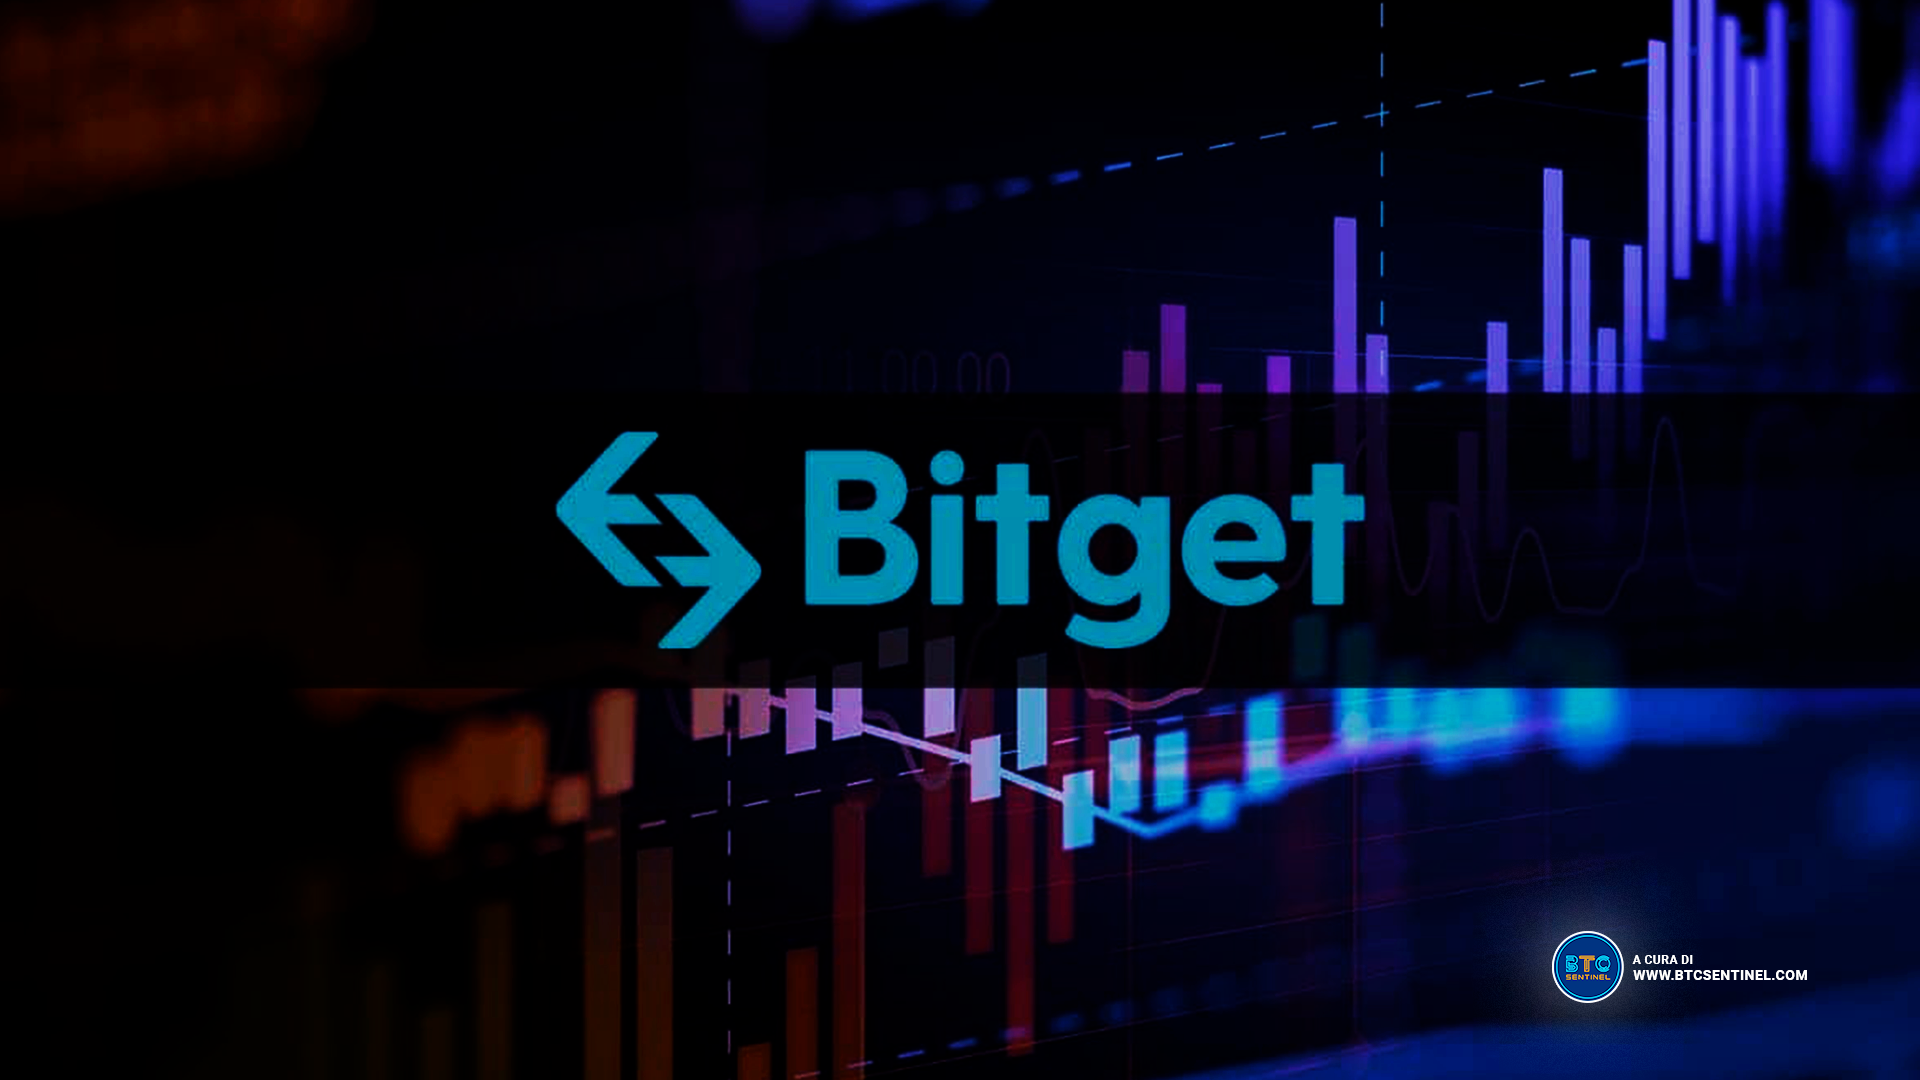 L'exchange Bitget istituisce un fondo di protezione da 200 milioni di dollari